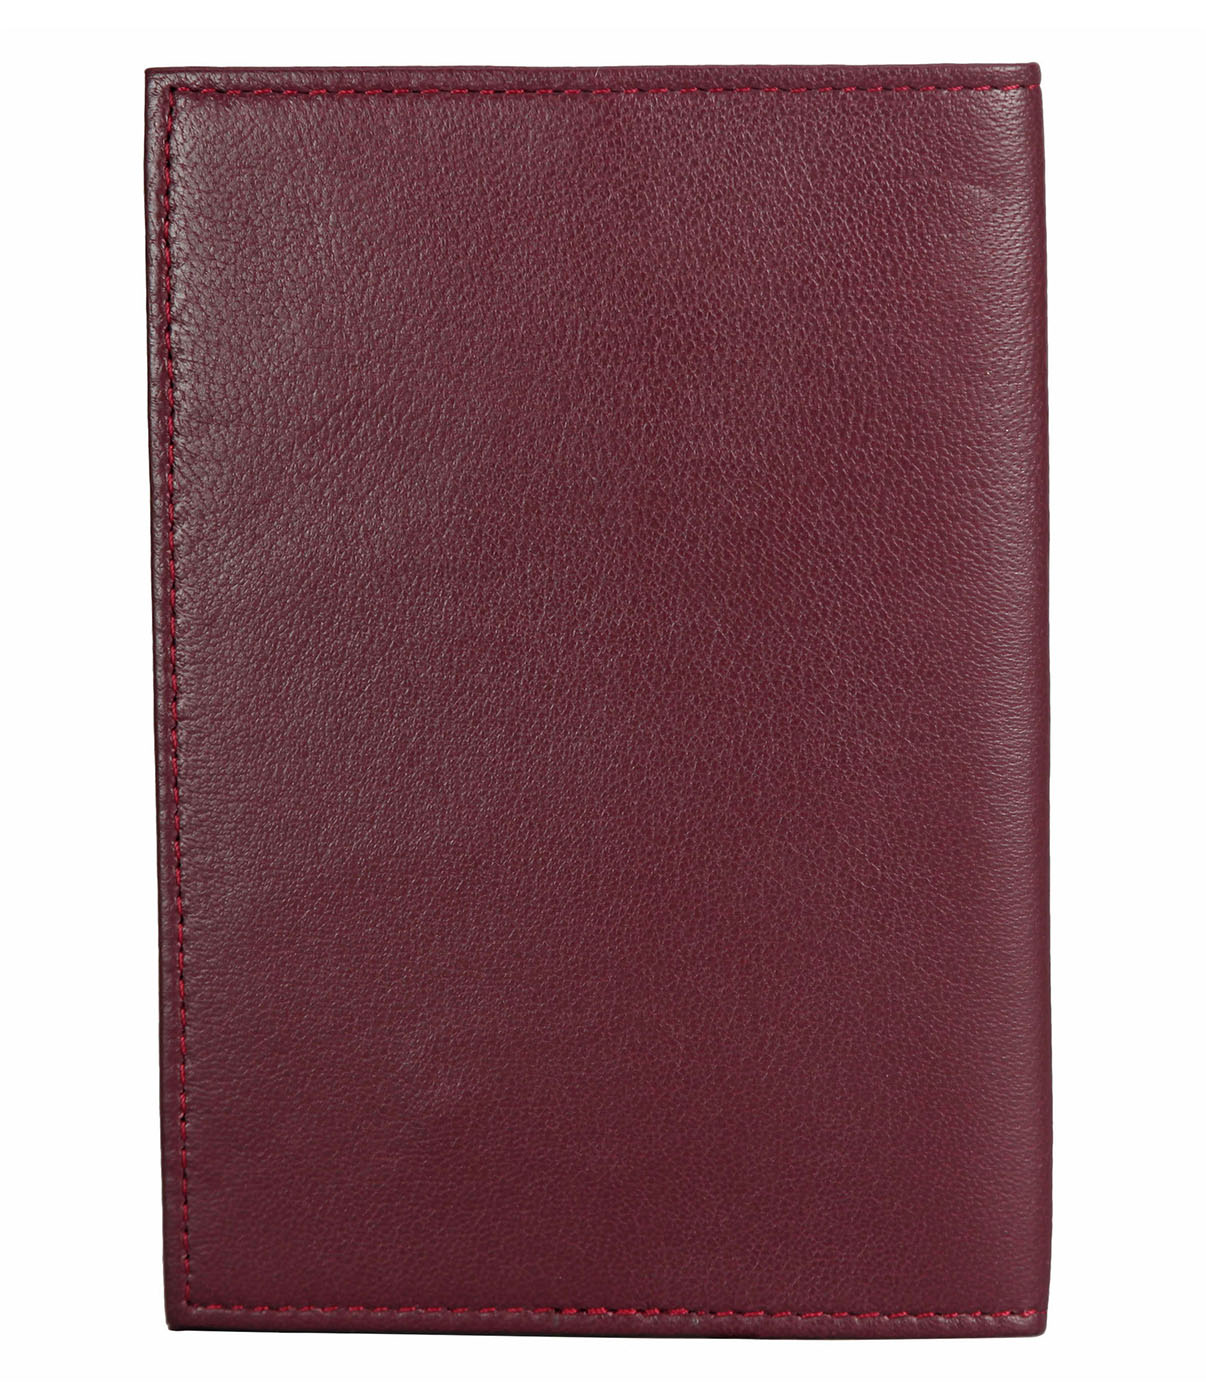 Travel Essential--Passport cover in Genuine Leather - Wine